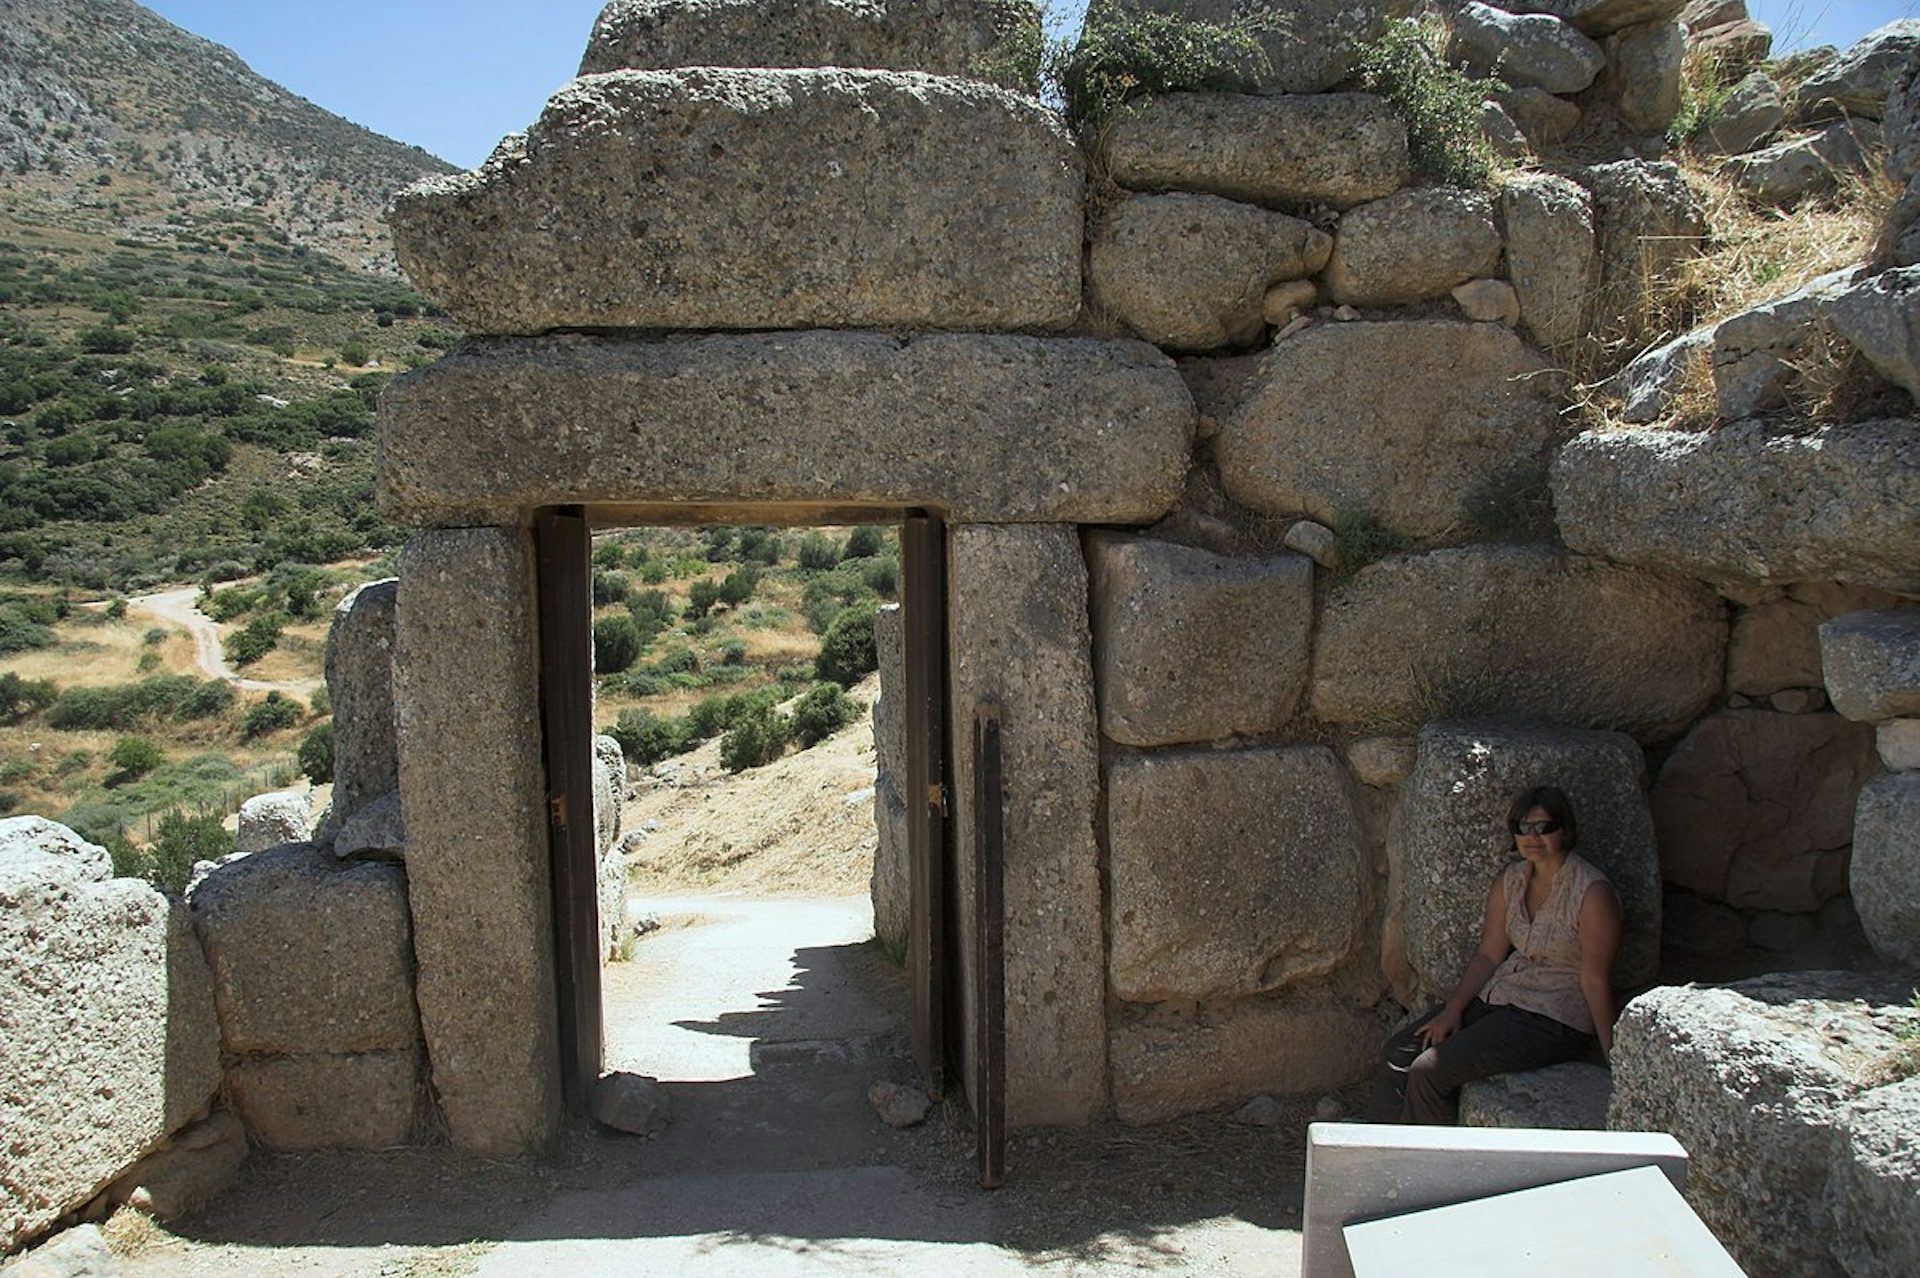 Postern gate of Mycenae